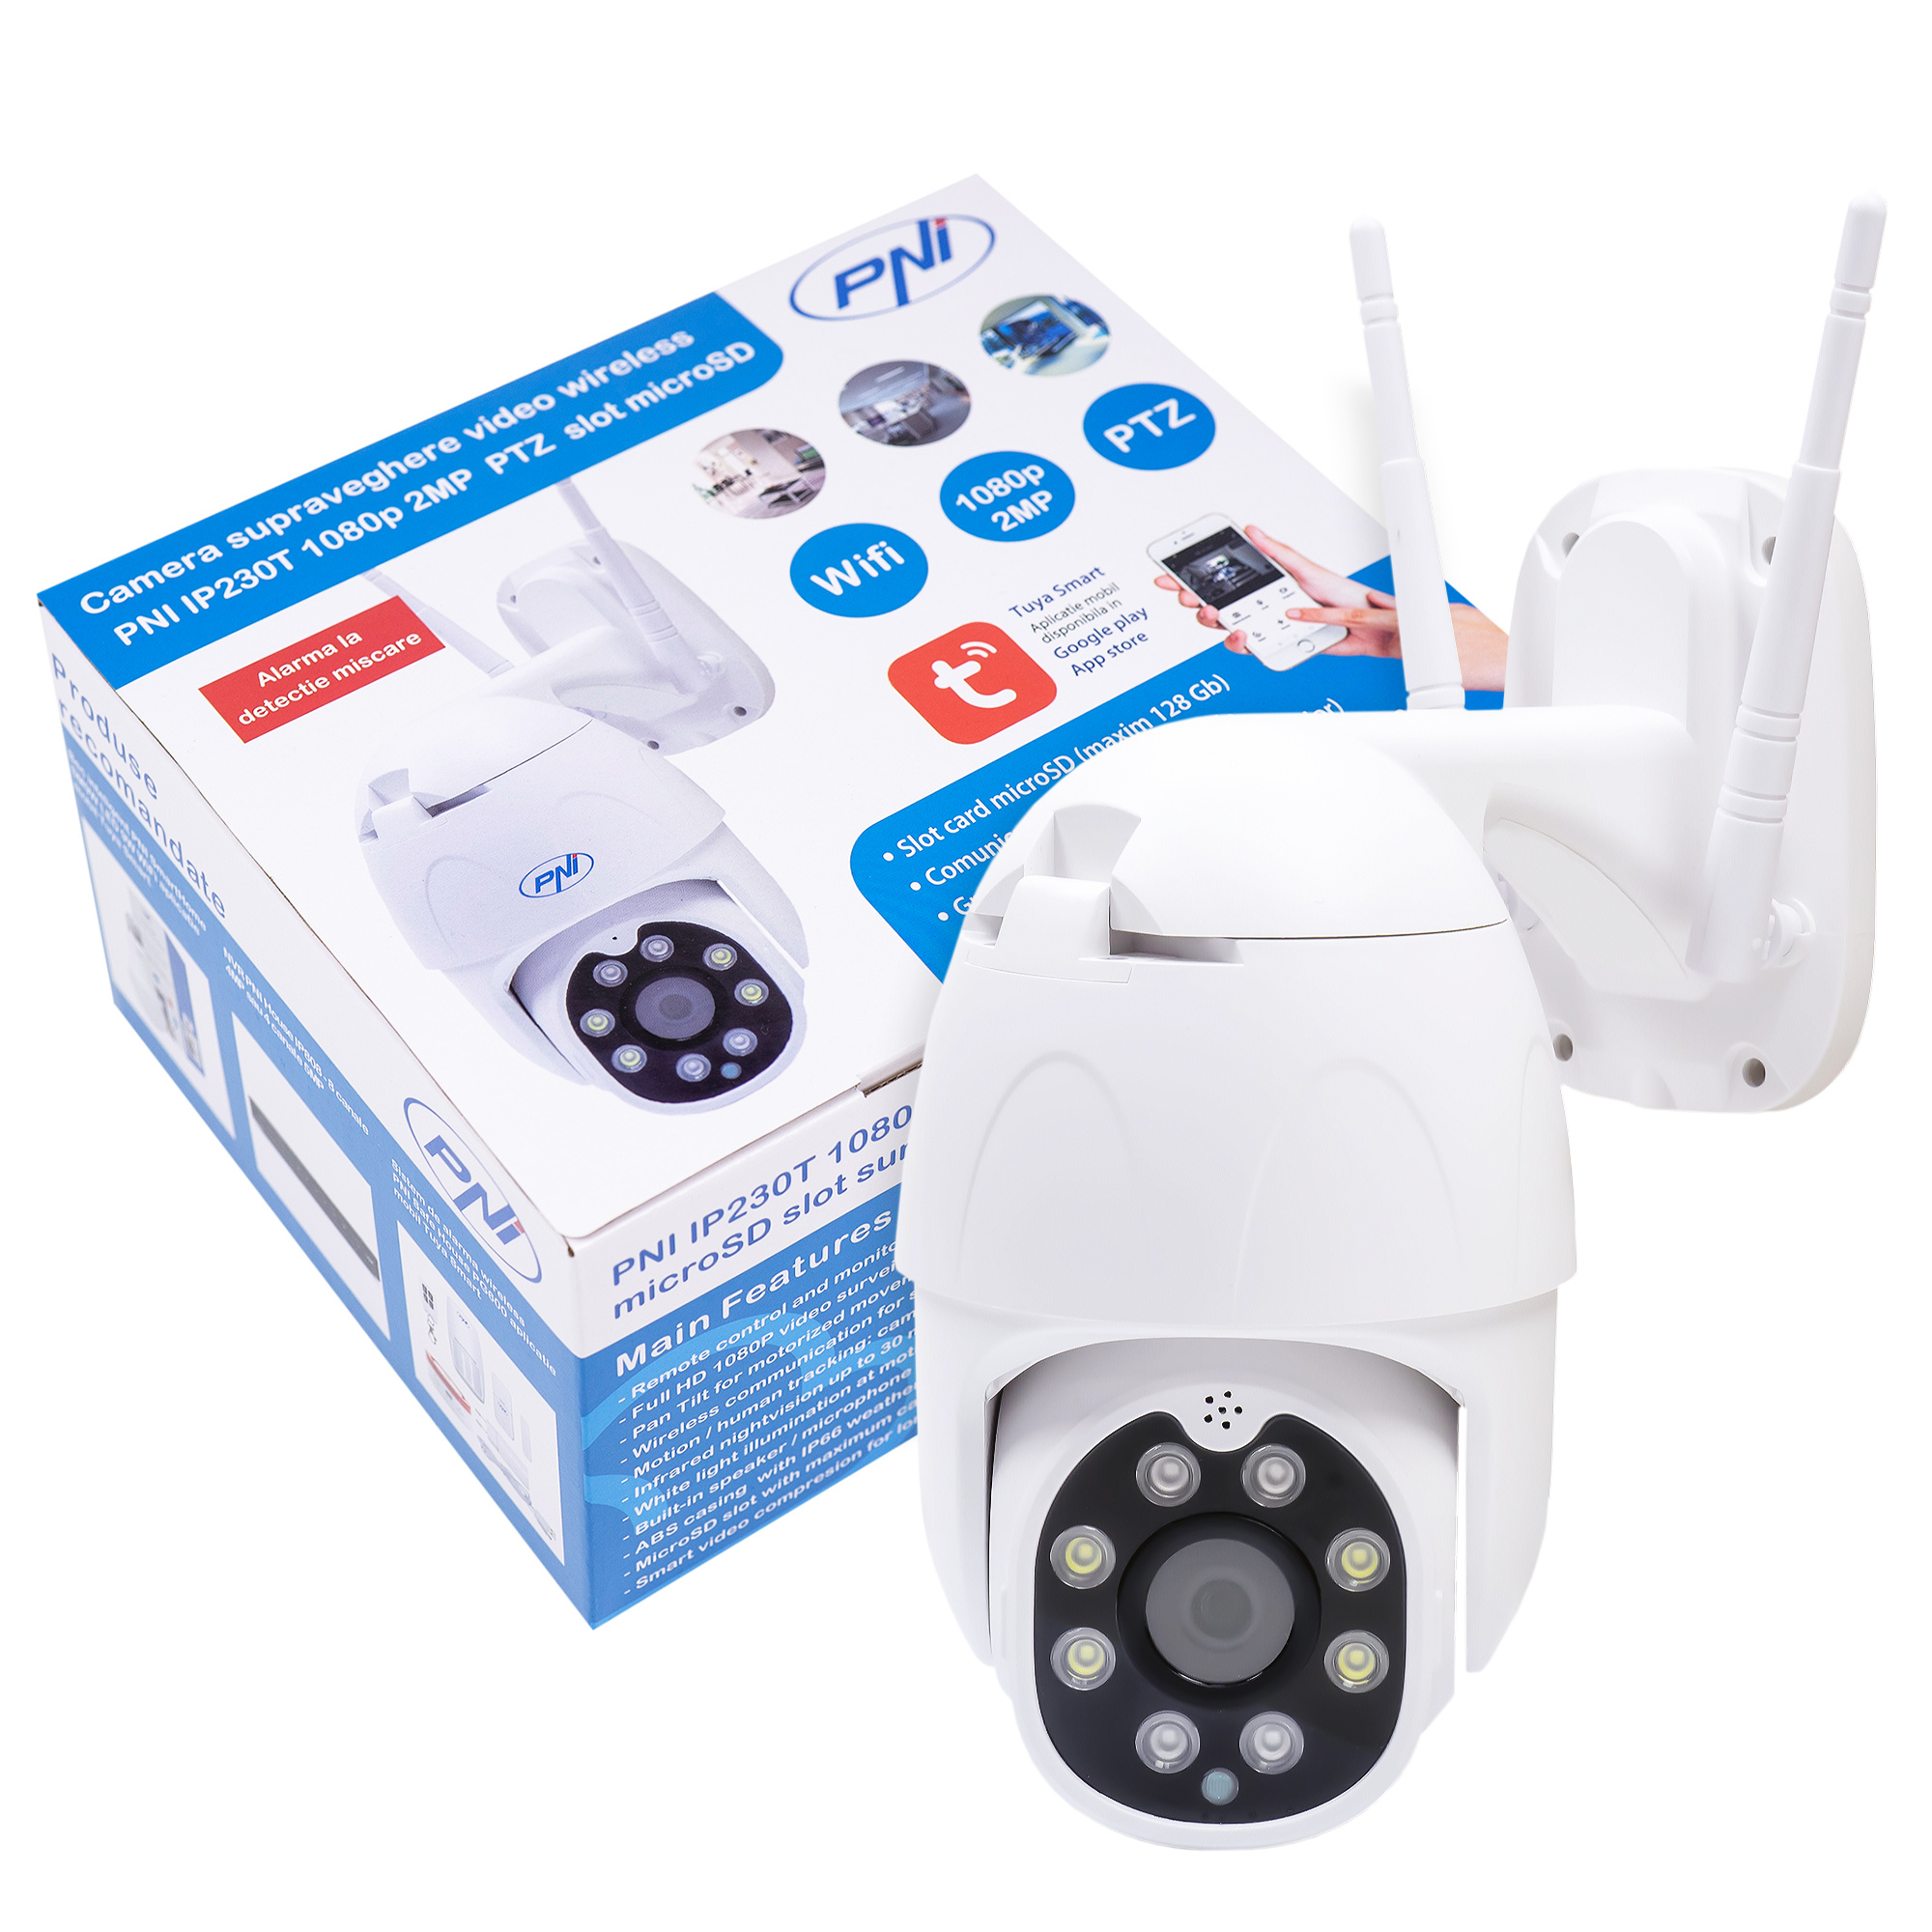 Camera supraveghere wireless PNI IP230T 1080P cu PTZ, H264+, Night Vision, aplicatia Tuya, P2P, Android, iOS, pentru interior si exterior, rotire dupa miscare, alarma la miscare